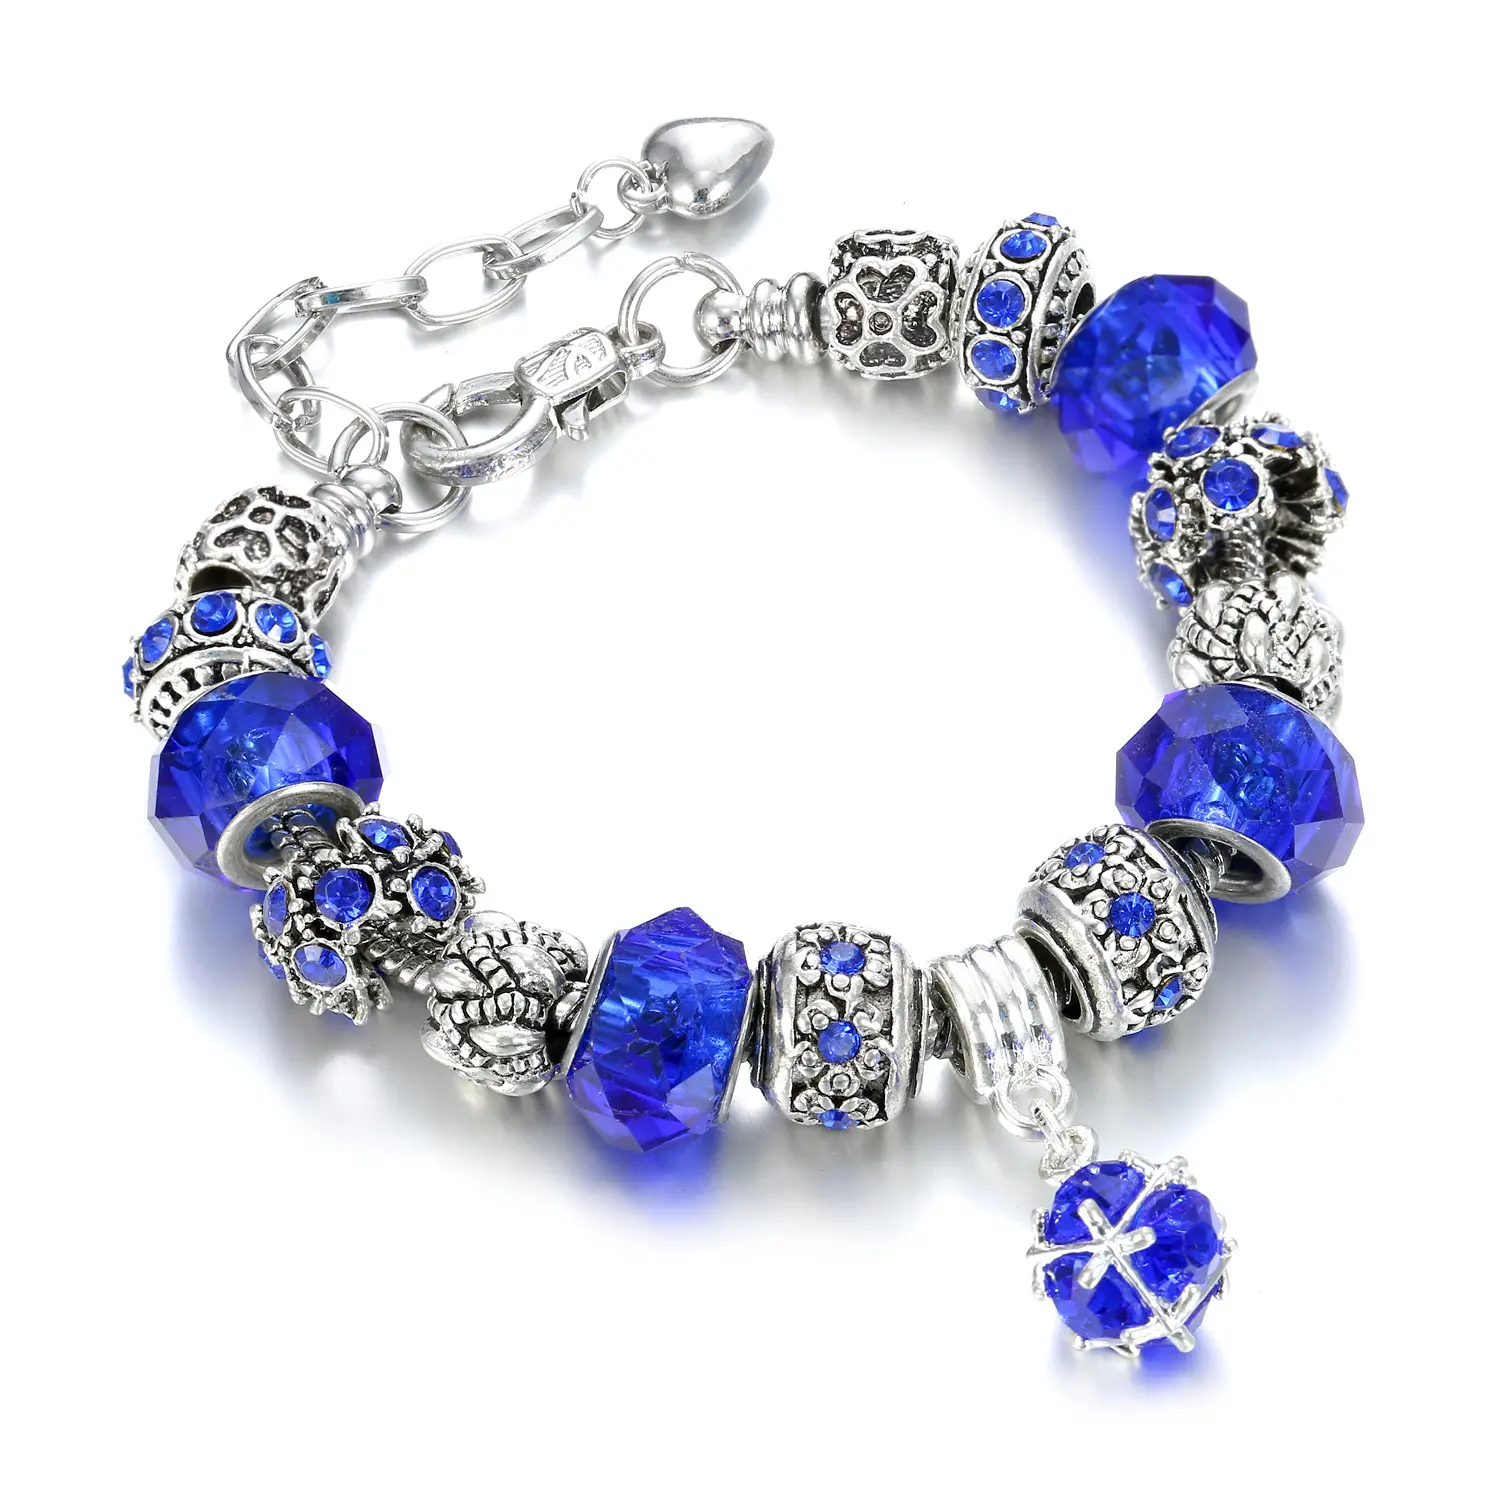 Moderne Silber Überzogene Blau Murano Glas Kristall Perle Charme Armband Regenbogen Farbe Funken Kristall Ball Charme Armband Für Mädchen